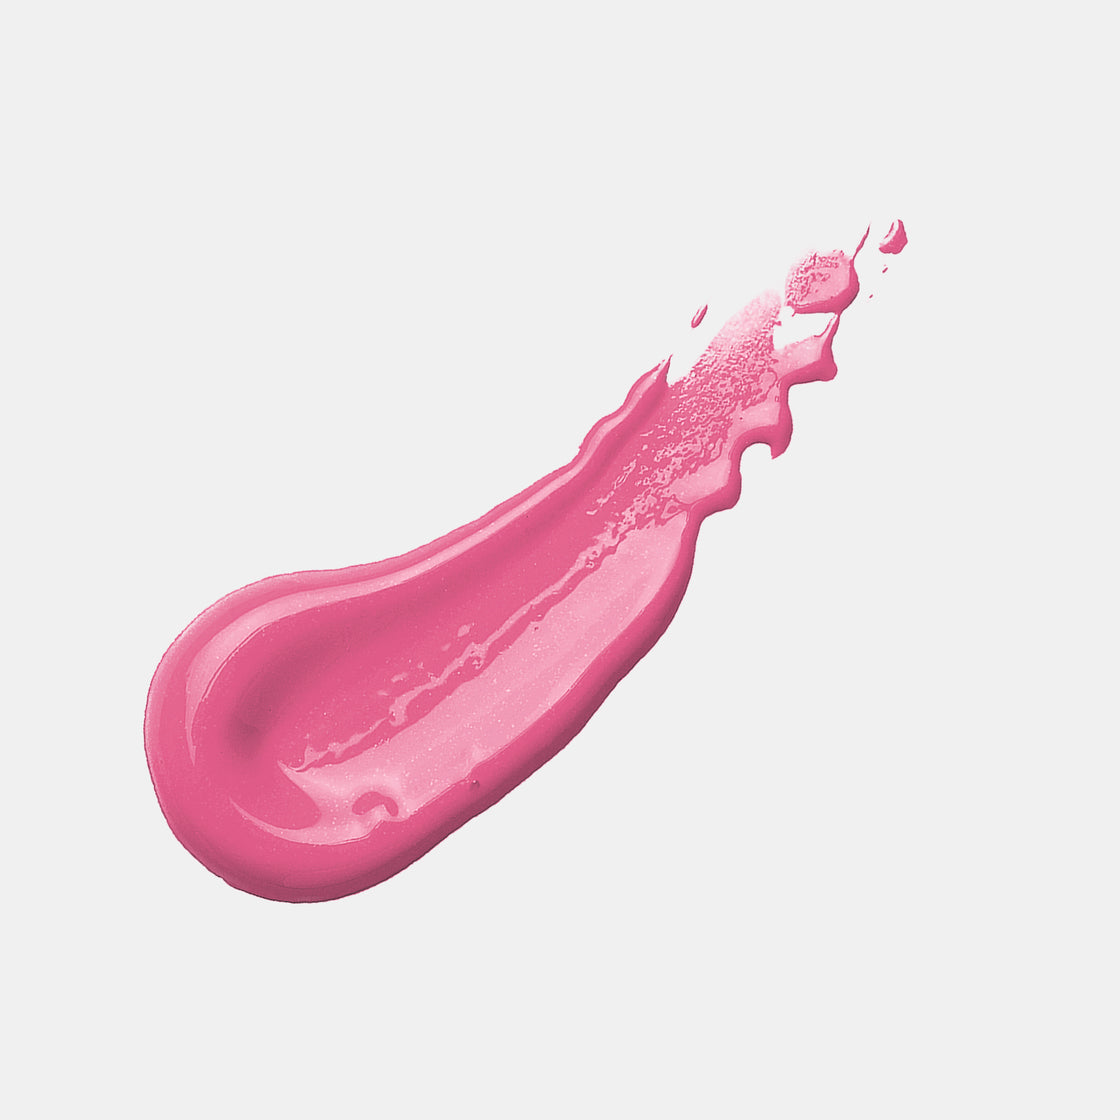 Pink Peony - Liquid Lip Color-Lip Gloss-cruelty free cosmetics-Sunny Leone